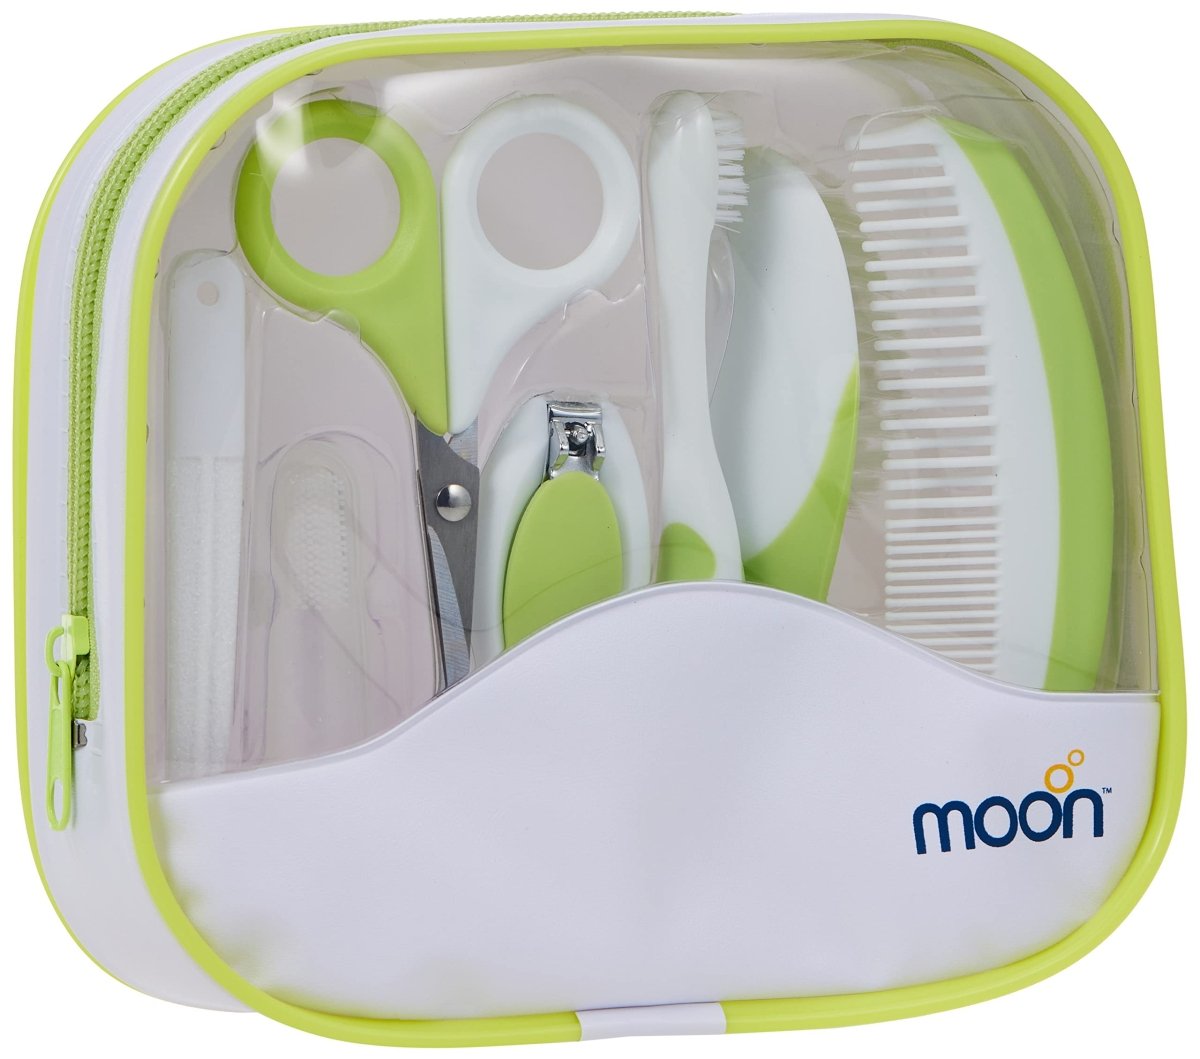 Moon Grooming Kit Grooming White & Green - MNBSHGR10